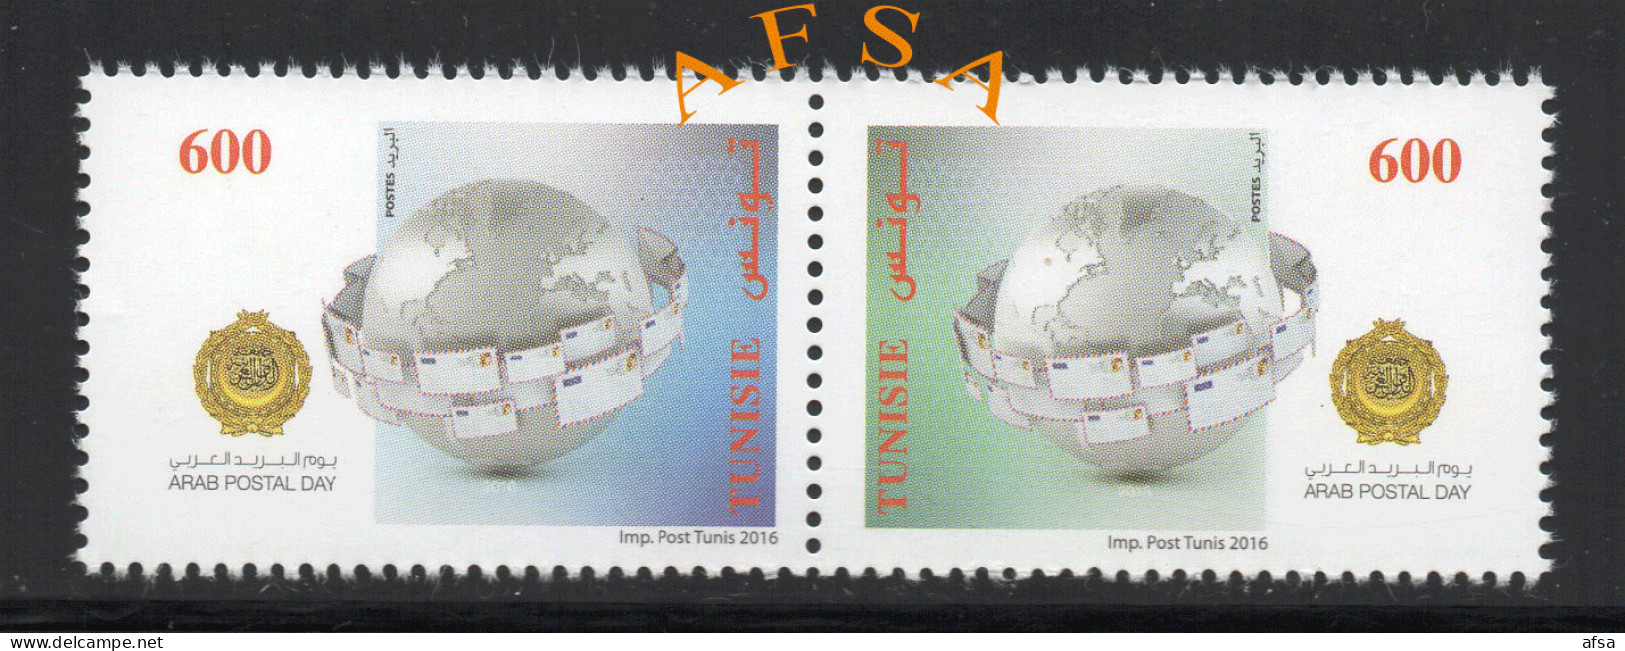 Tunisia 2016-Arab Postal Day-(Pair) Joint Issue With Egypt,Jordan,Bahrain,UAE.Lebanon,irak - Ongebruikt